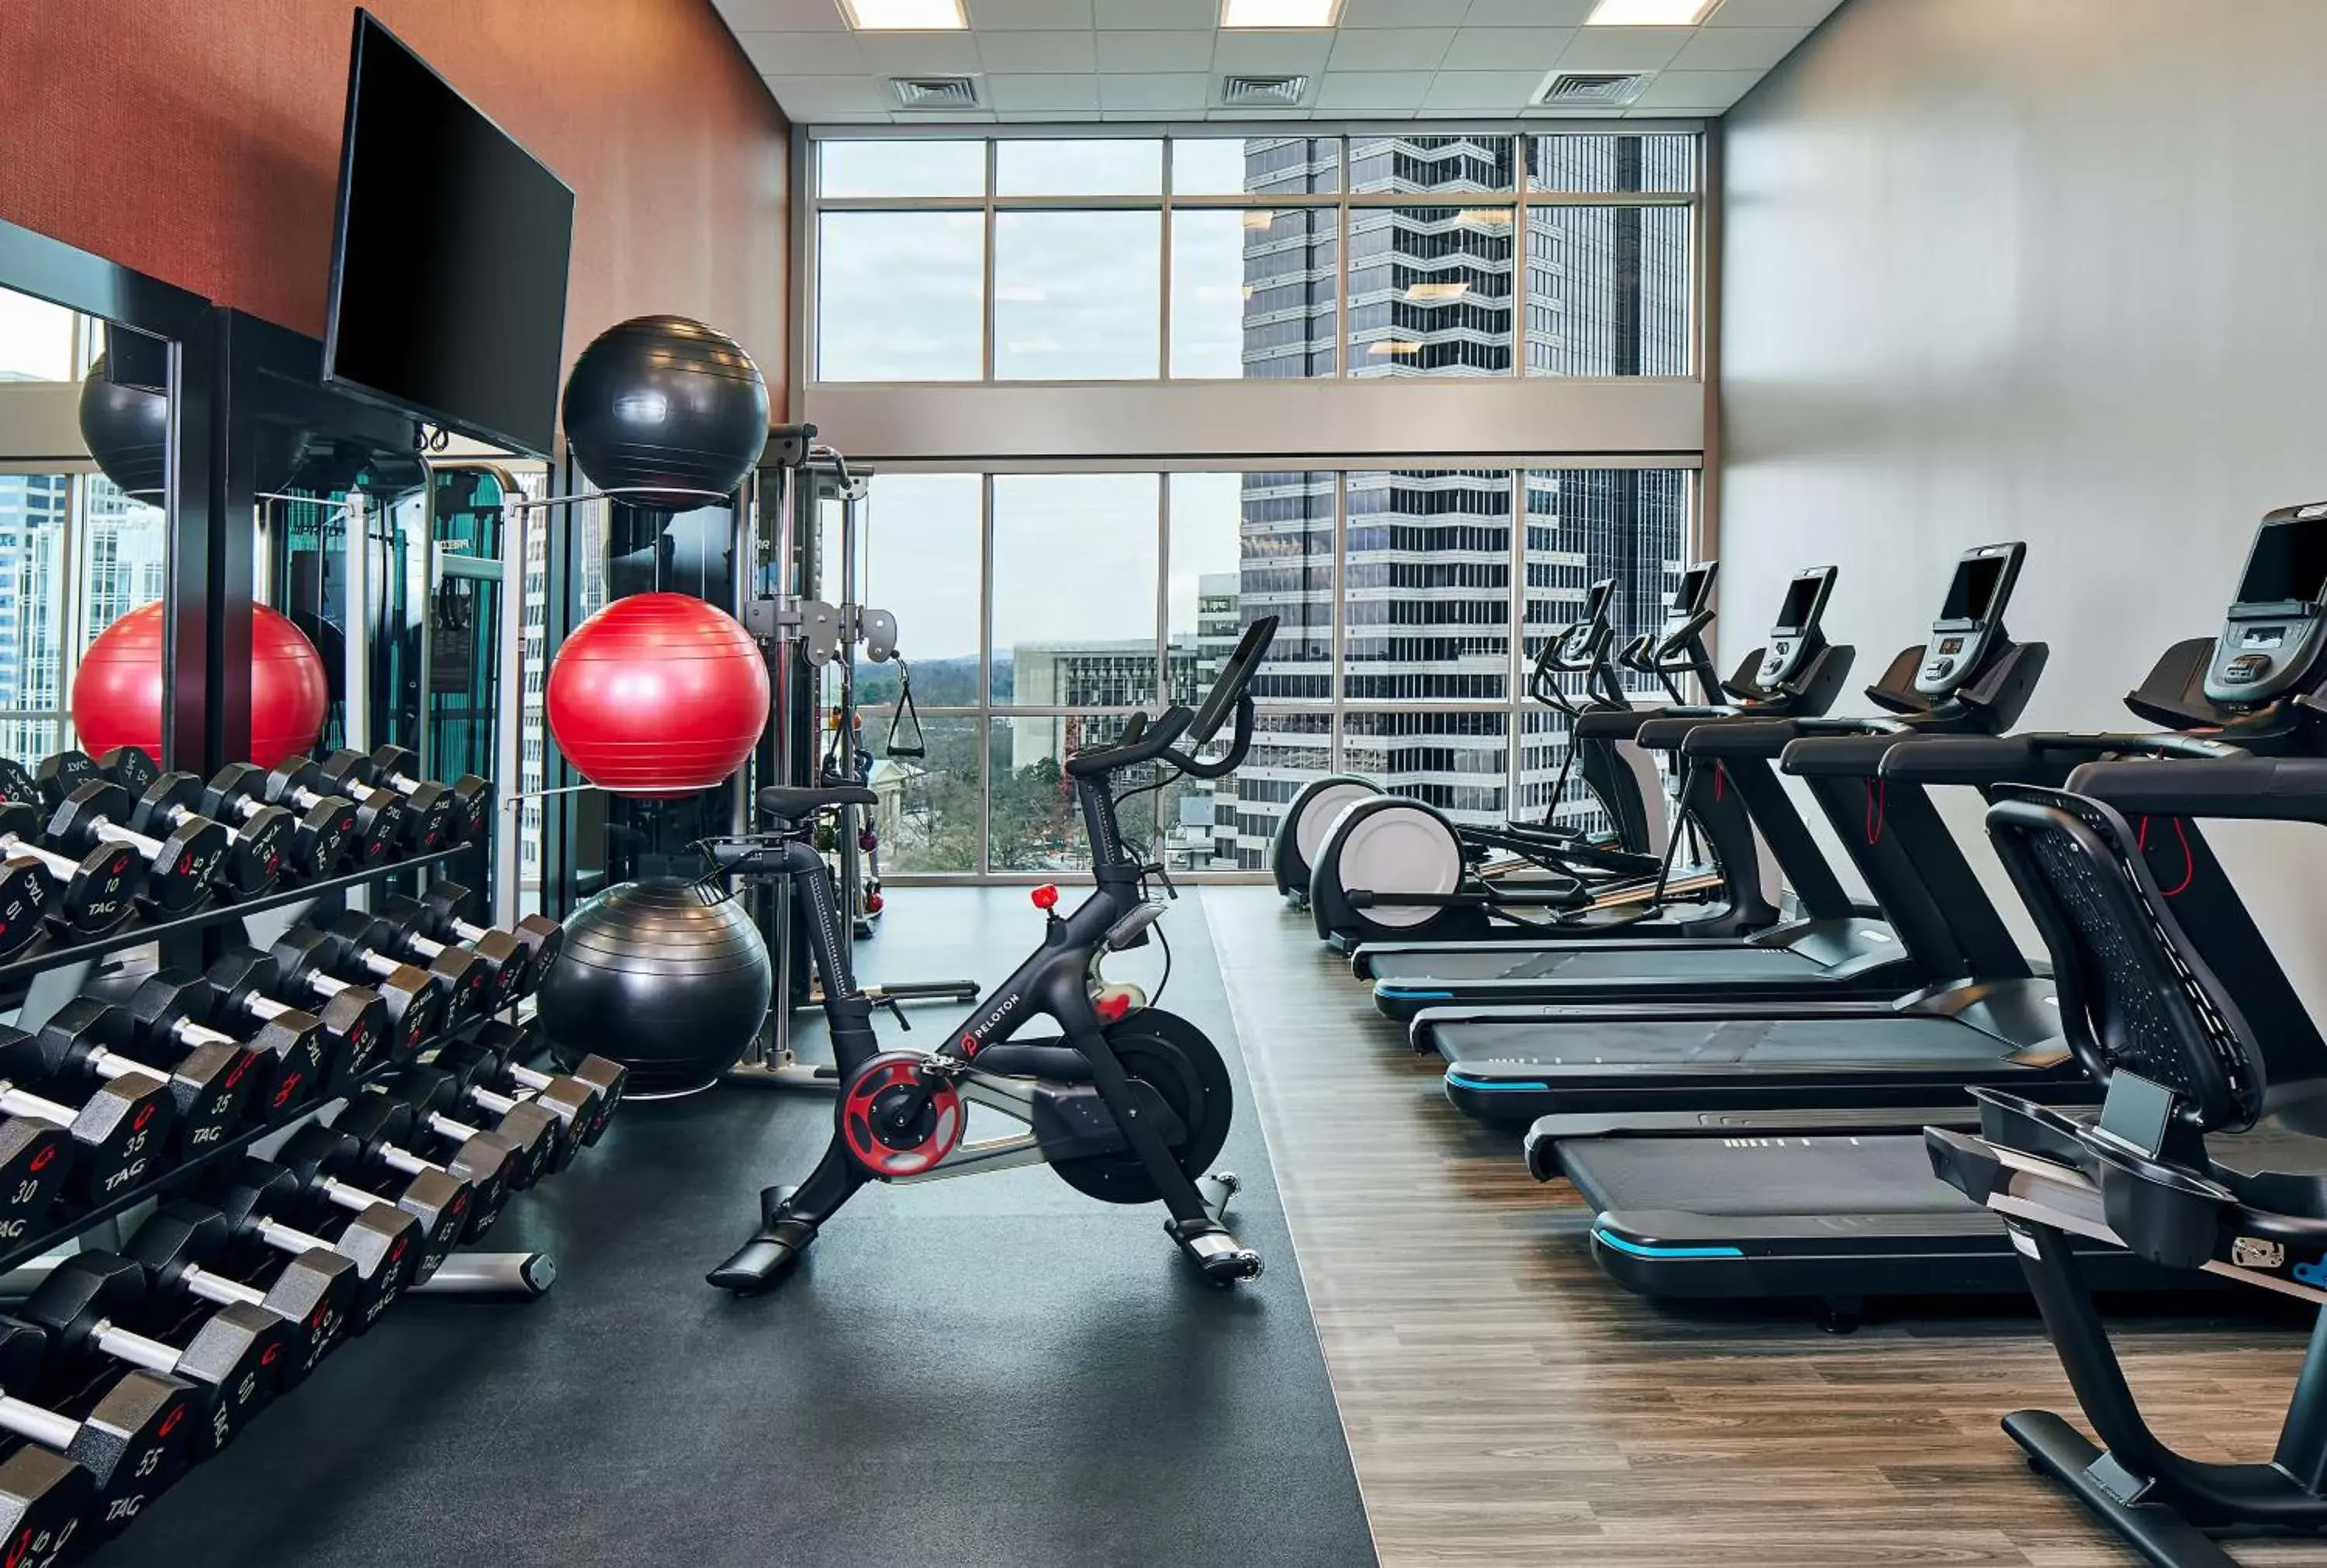 Fitness centre/facilities, Fitness Center/Facilities in Hampton Inn & Suites Atlanta-Midtown, Ga